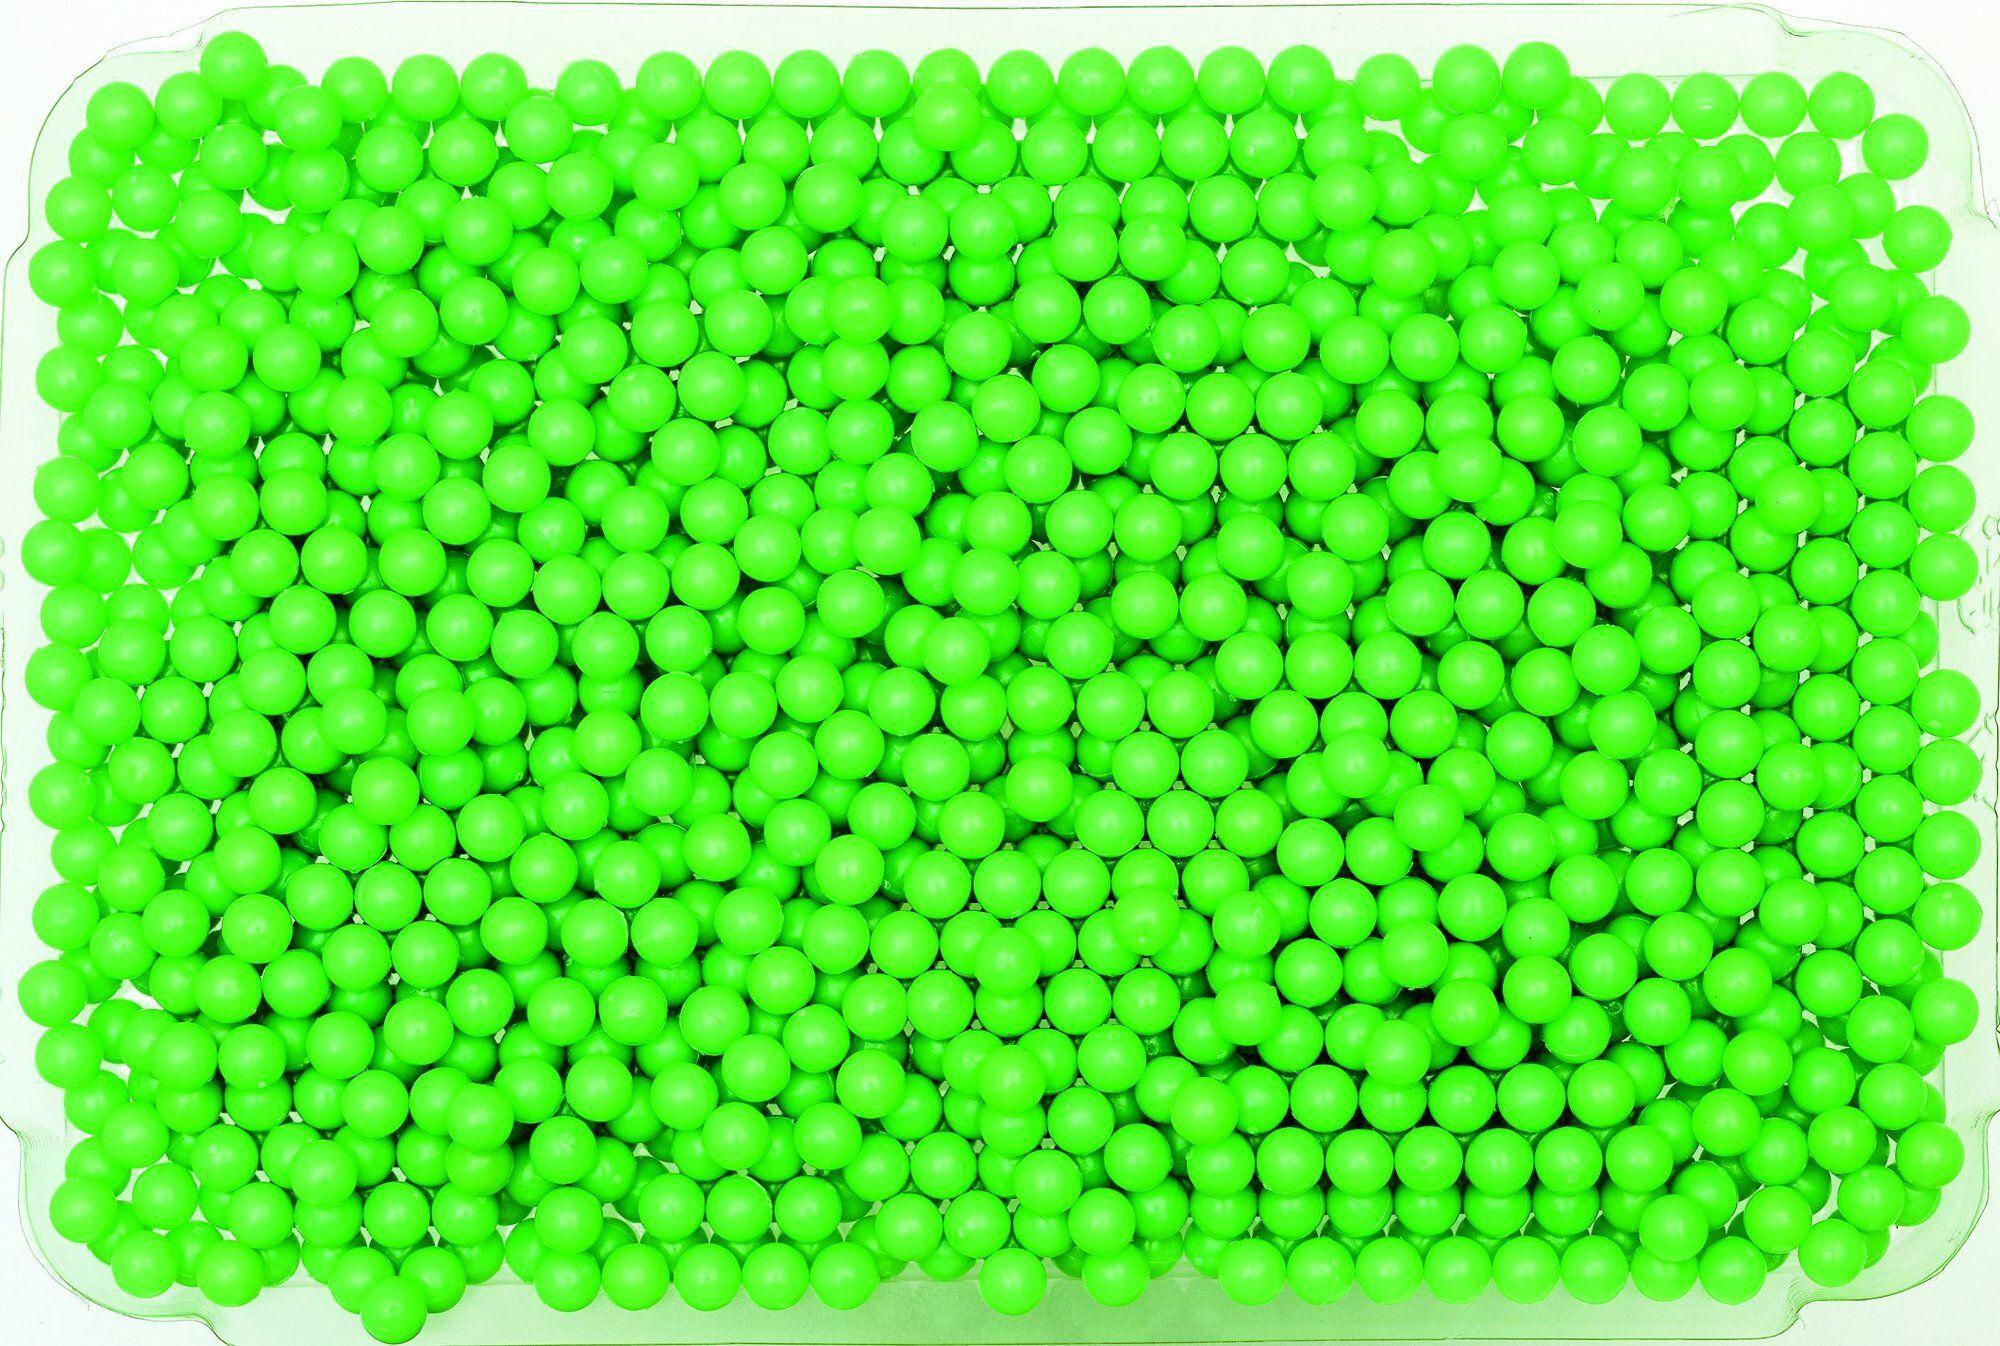 Aquabeads : Recharge de 600 perles marron - N/A - Kiabi - 11.11€